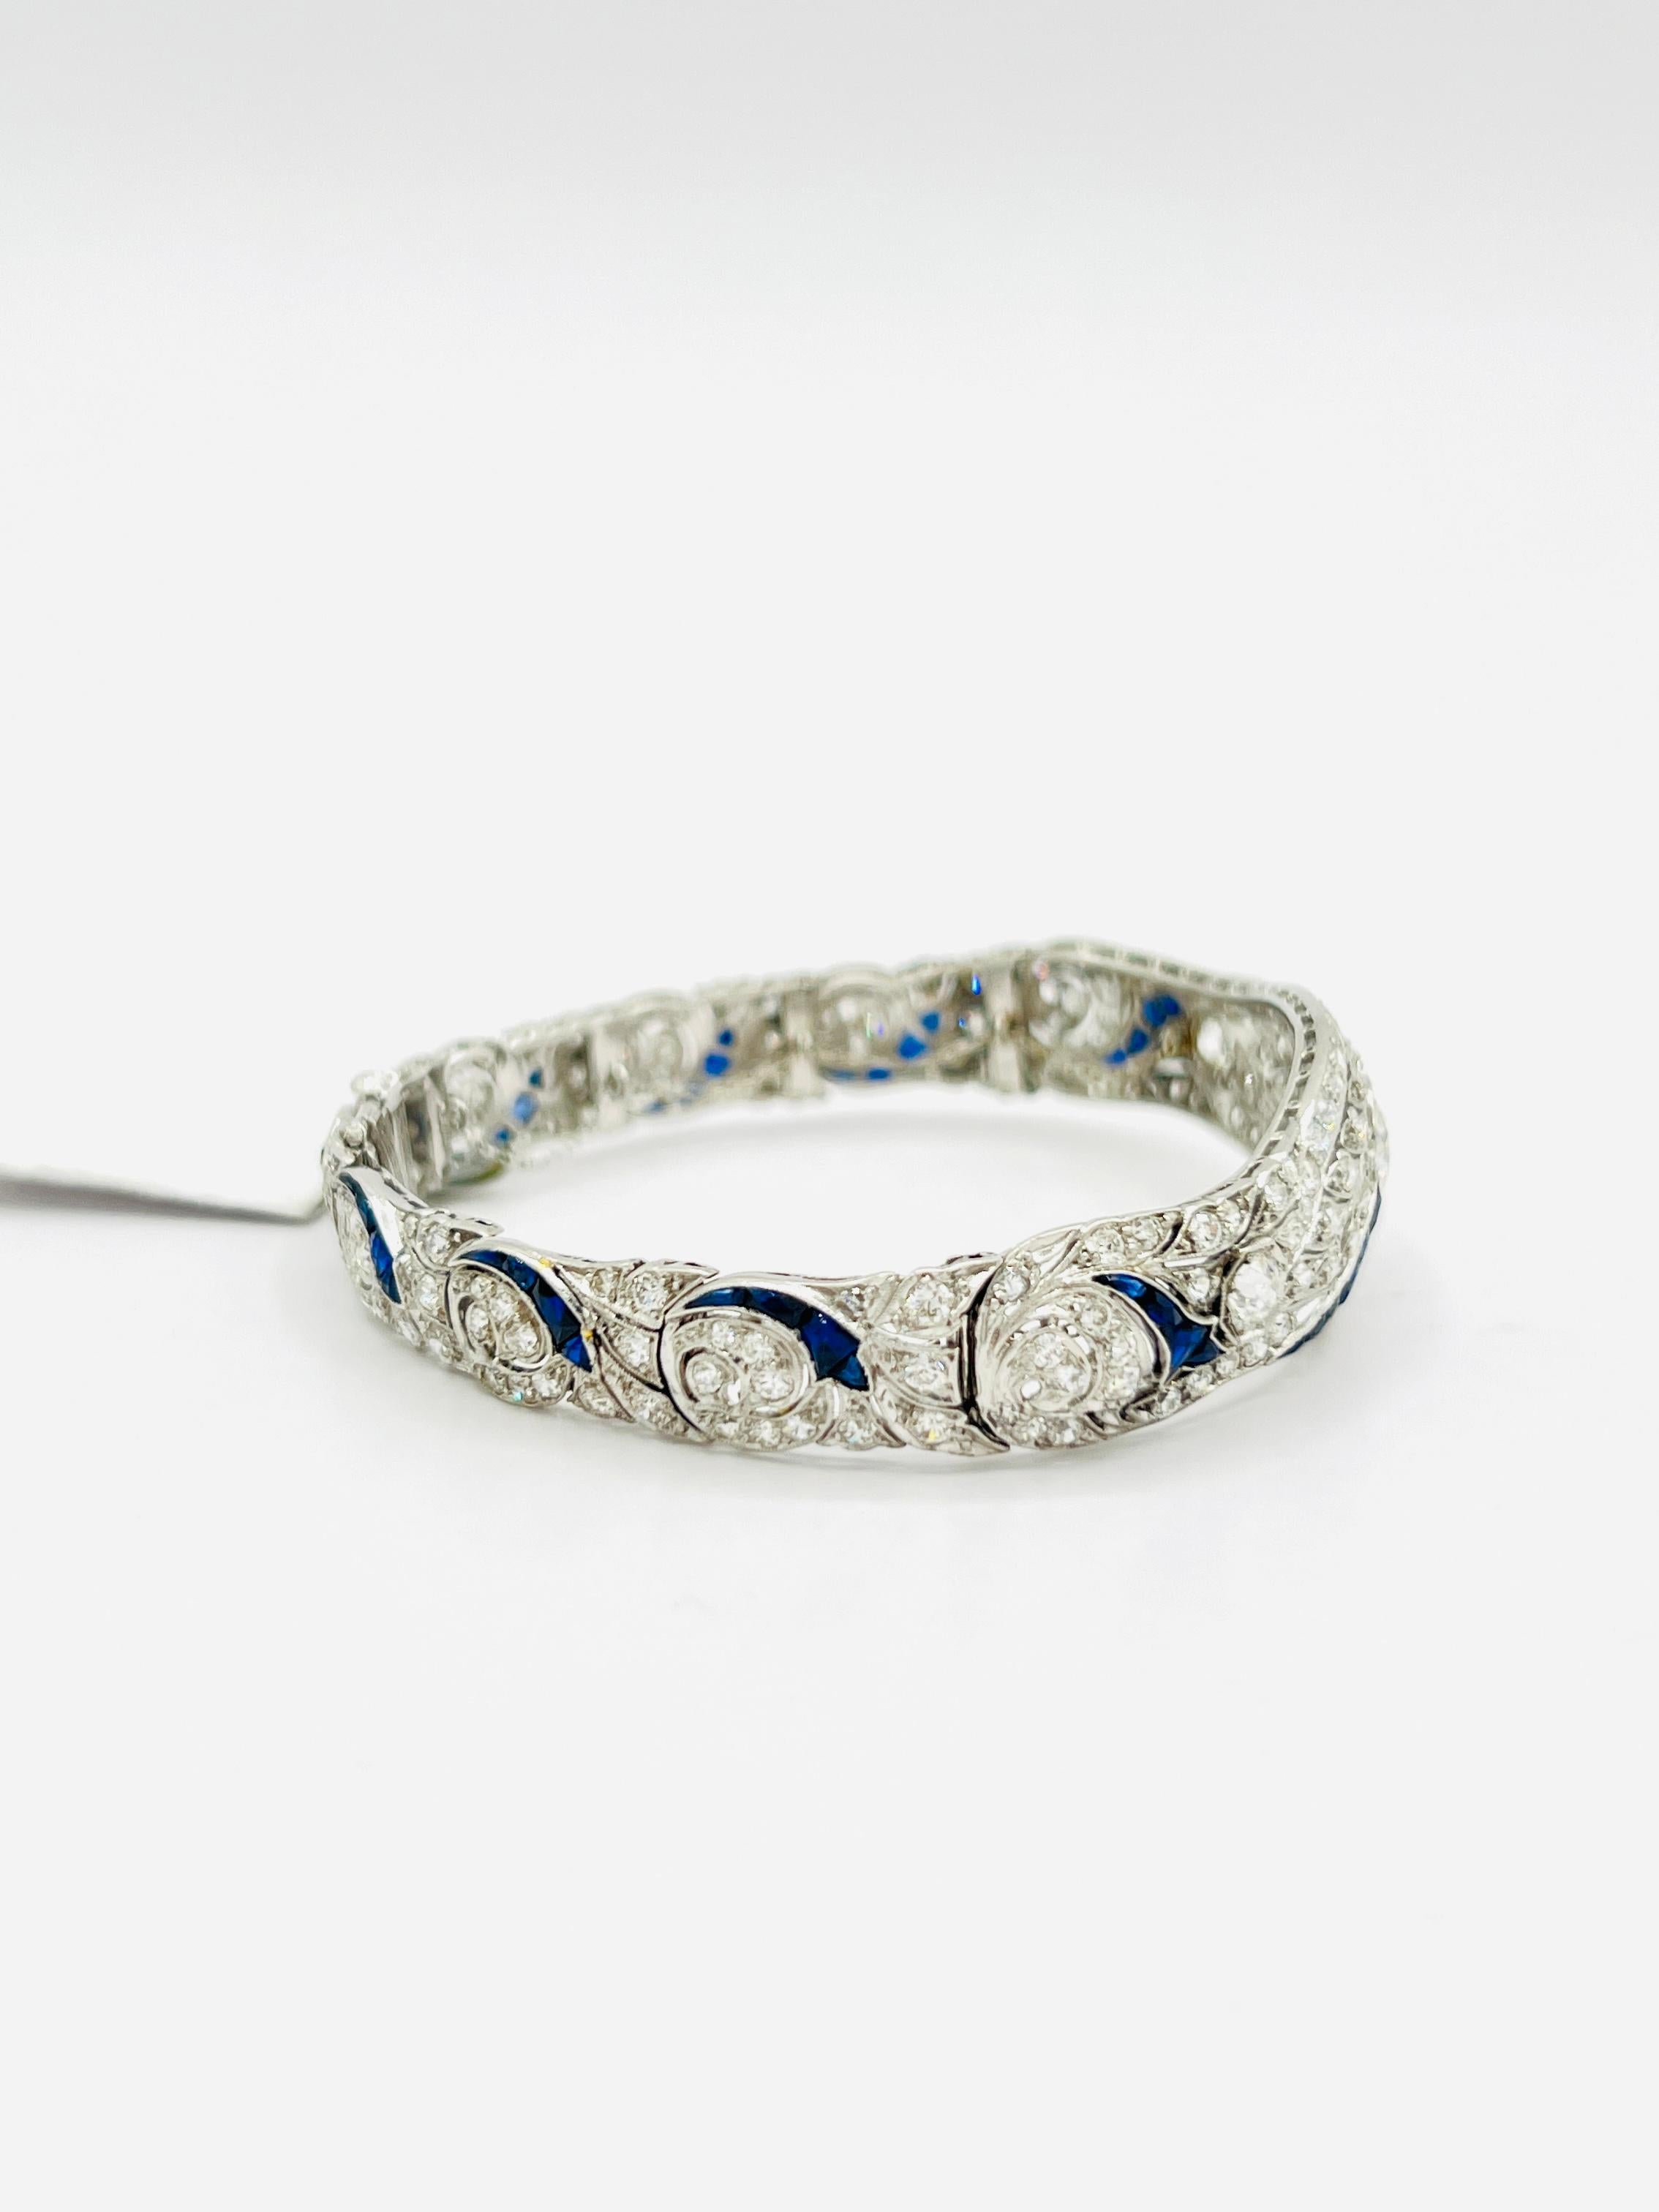 White Diamond and Blue Sapphire Bracelet in 18K white Gold For Sale 3